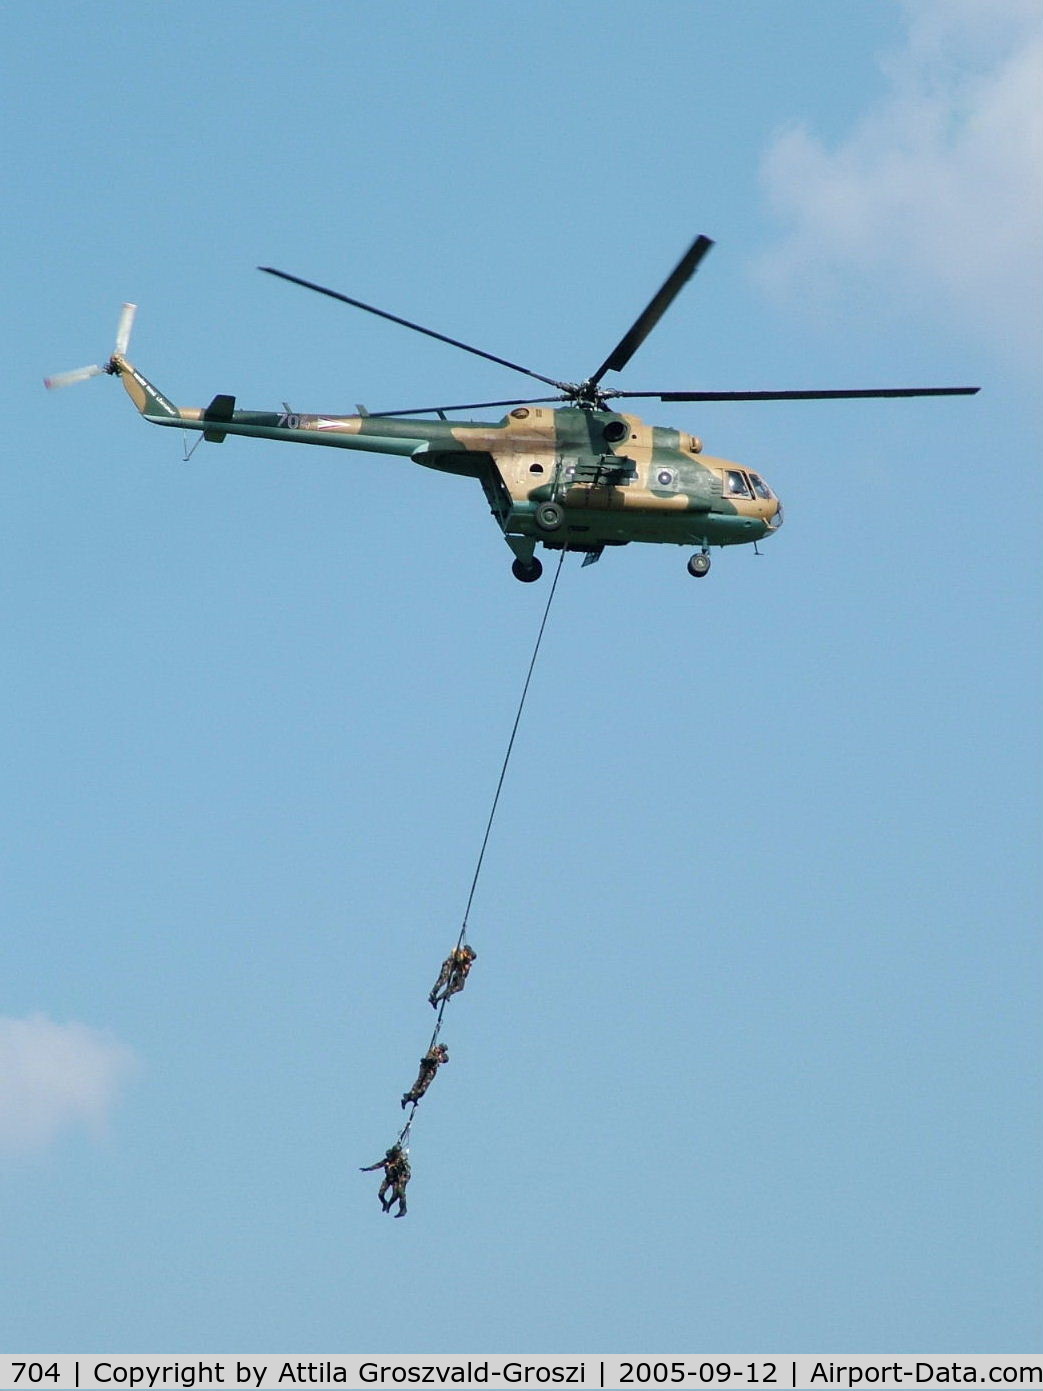 704, 1987 Mil Mi-17 Hip C/N 104M04, Veszprém-Jutas-Ujmajor temporary army helicopter base.